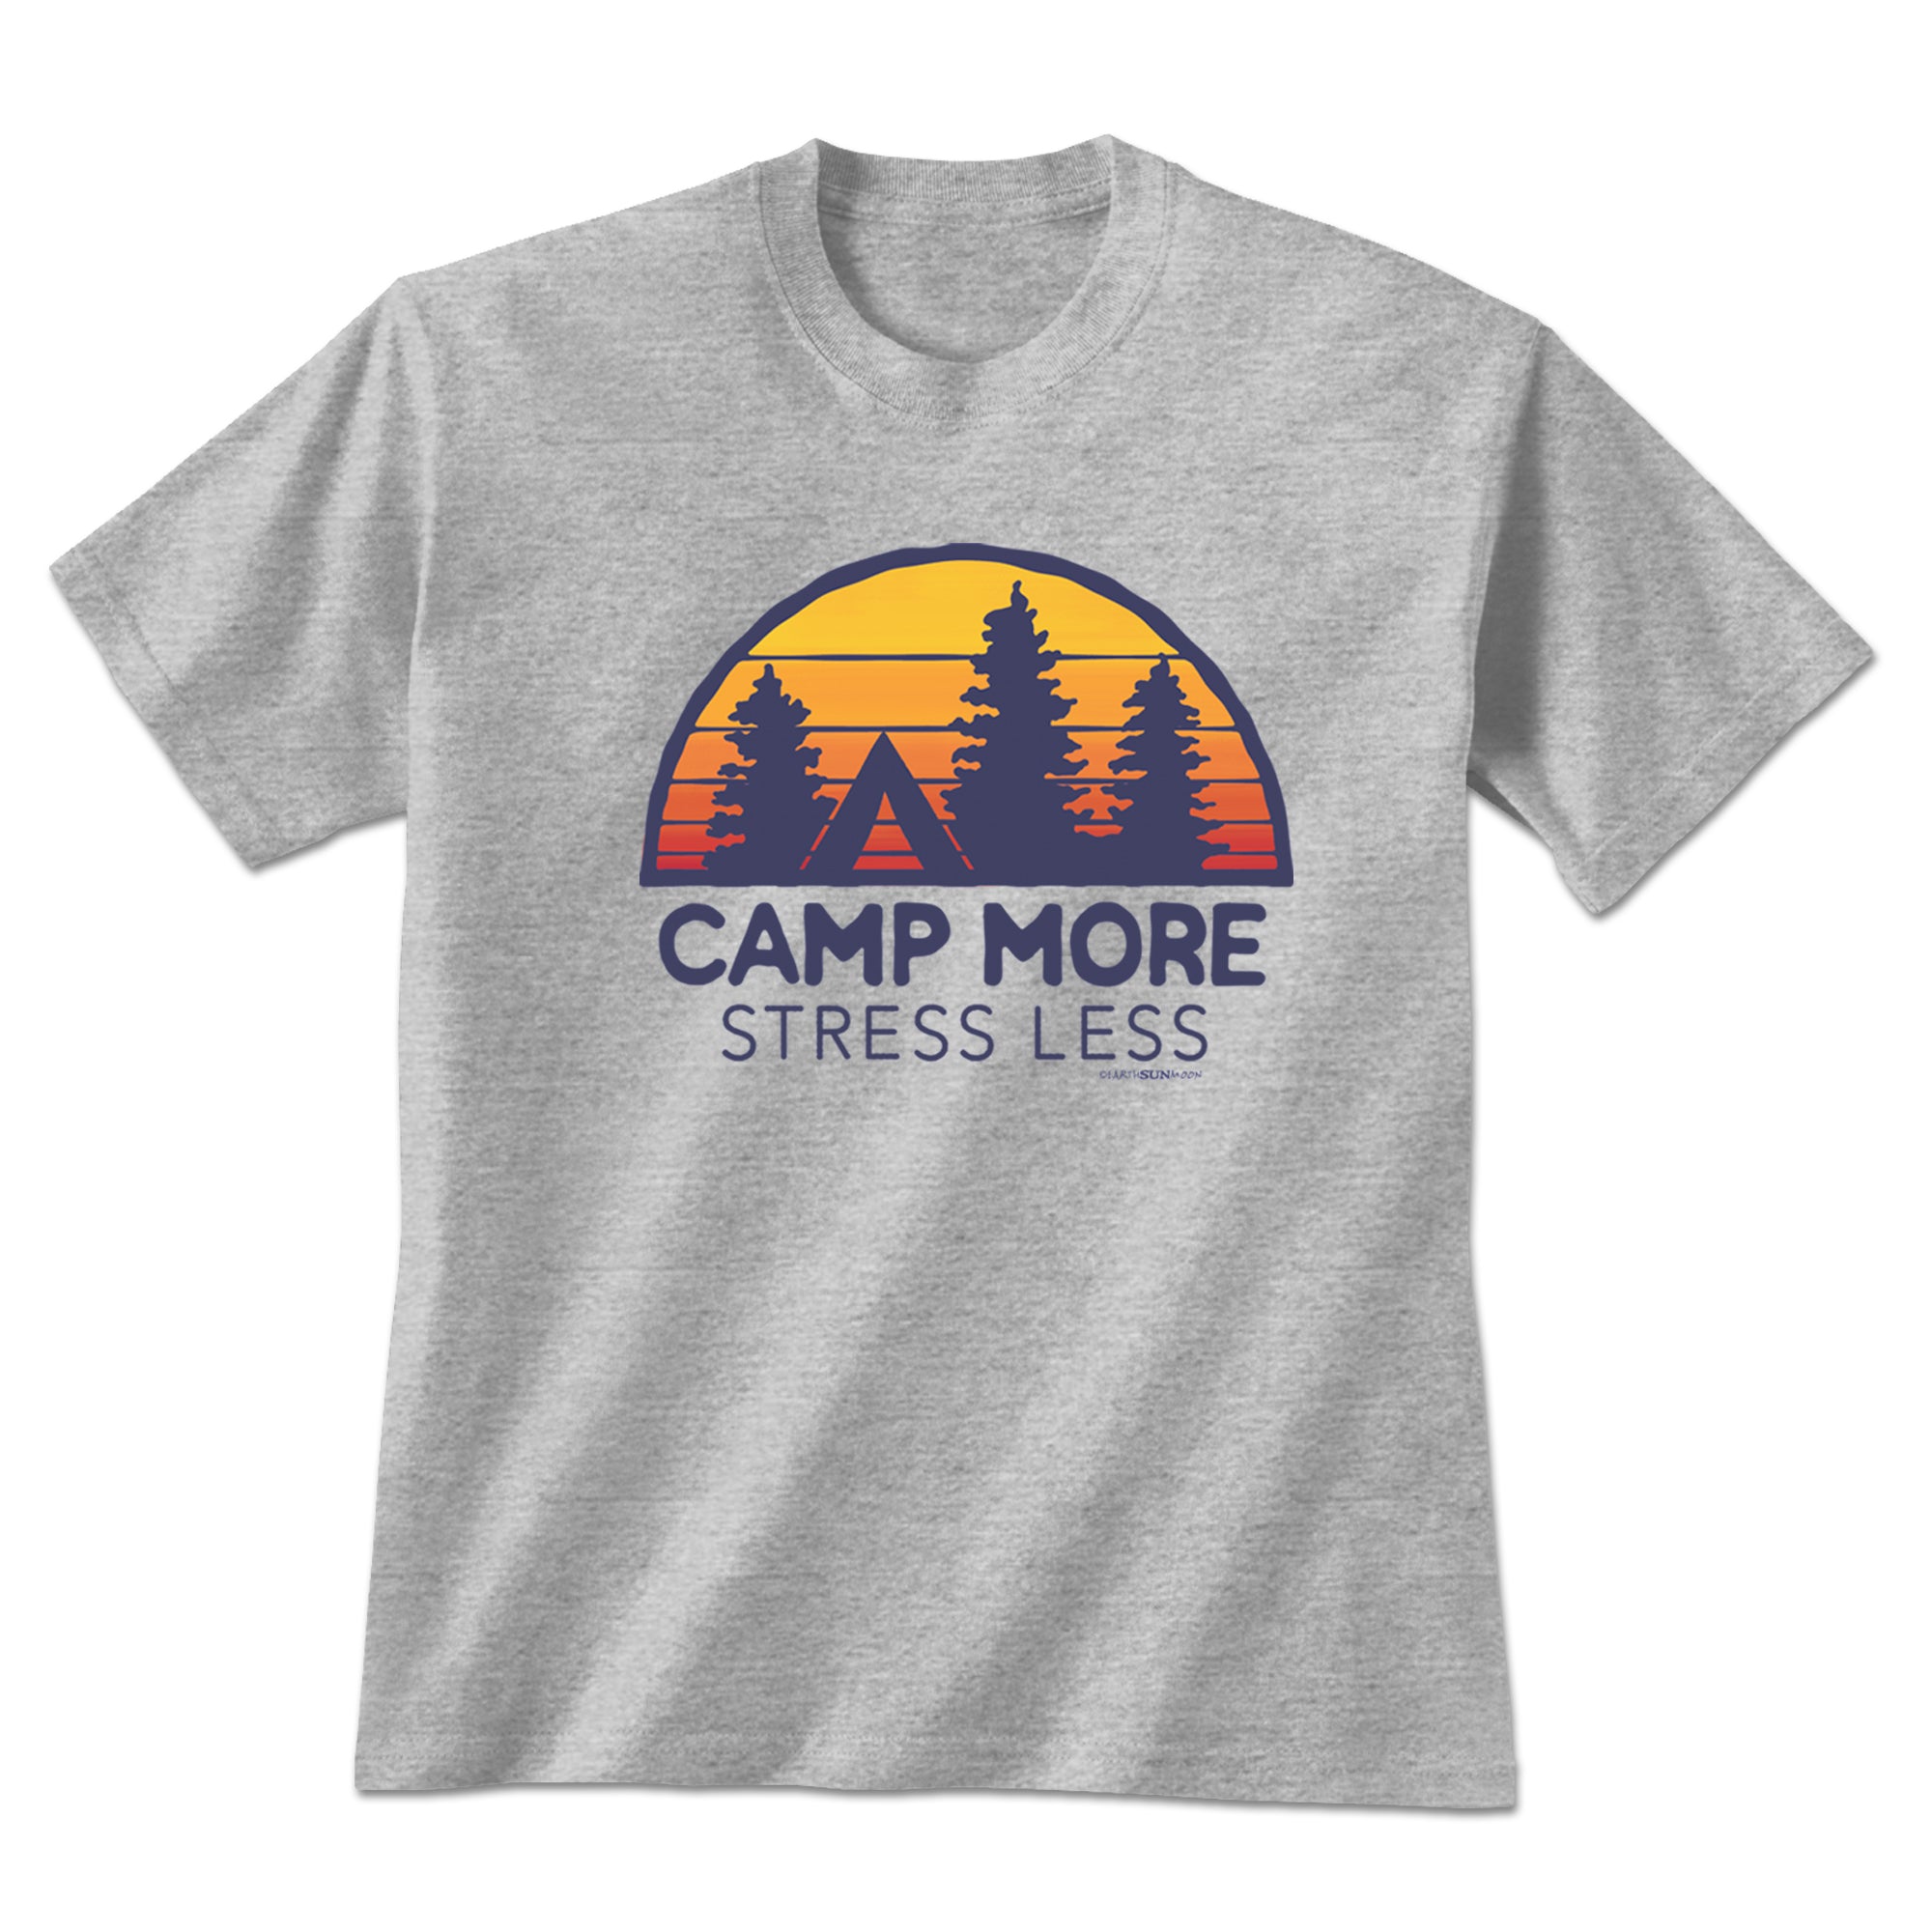 Camp More Stress Less T-Shirt - Sports Grey - Medium